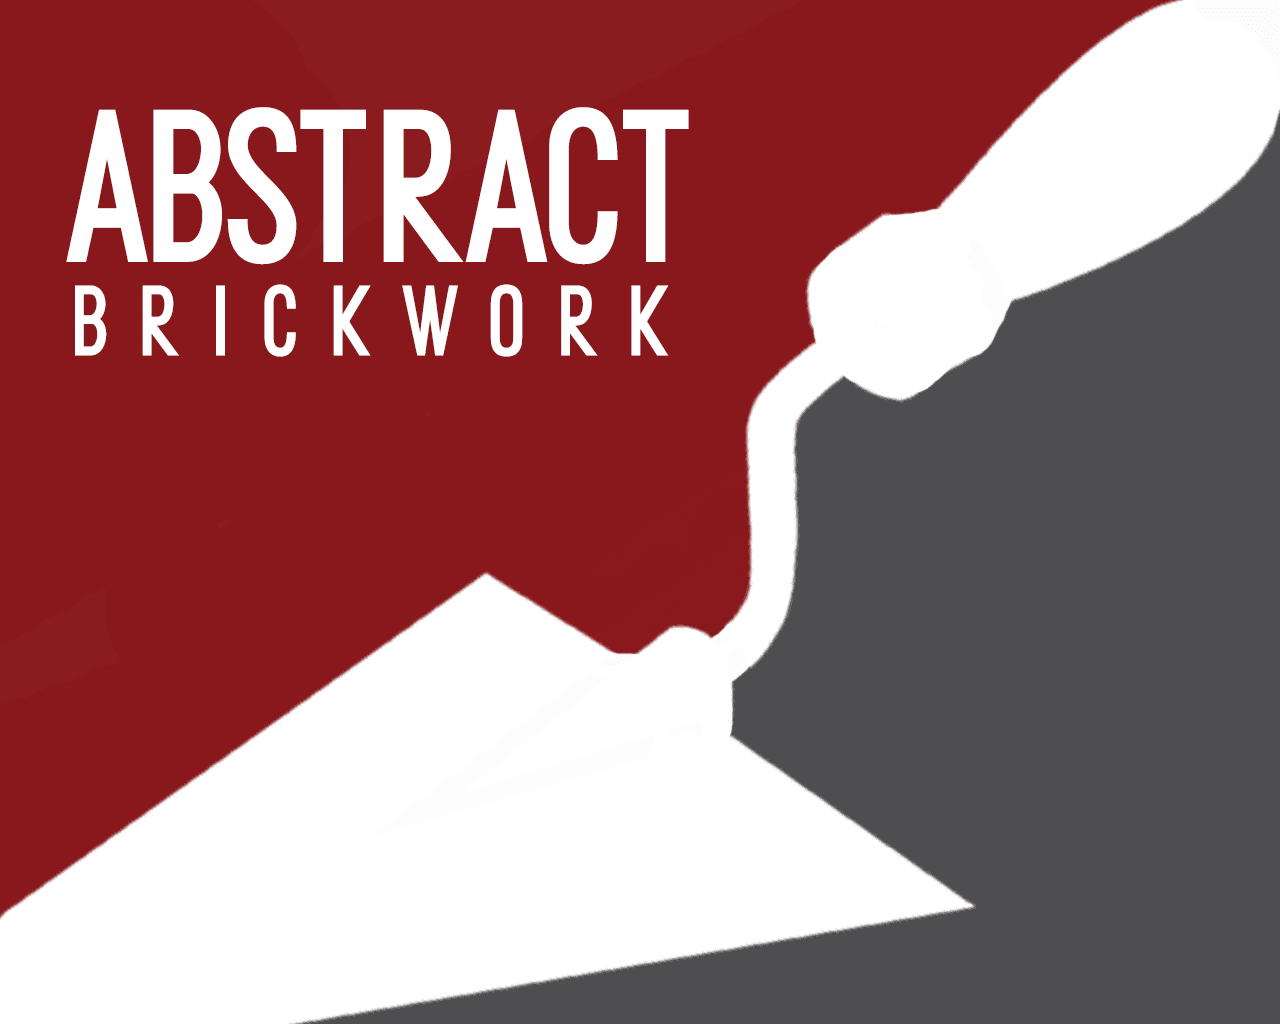 Abstract Brickwork Ltd